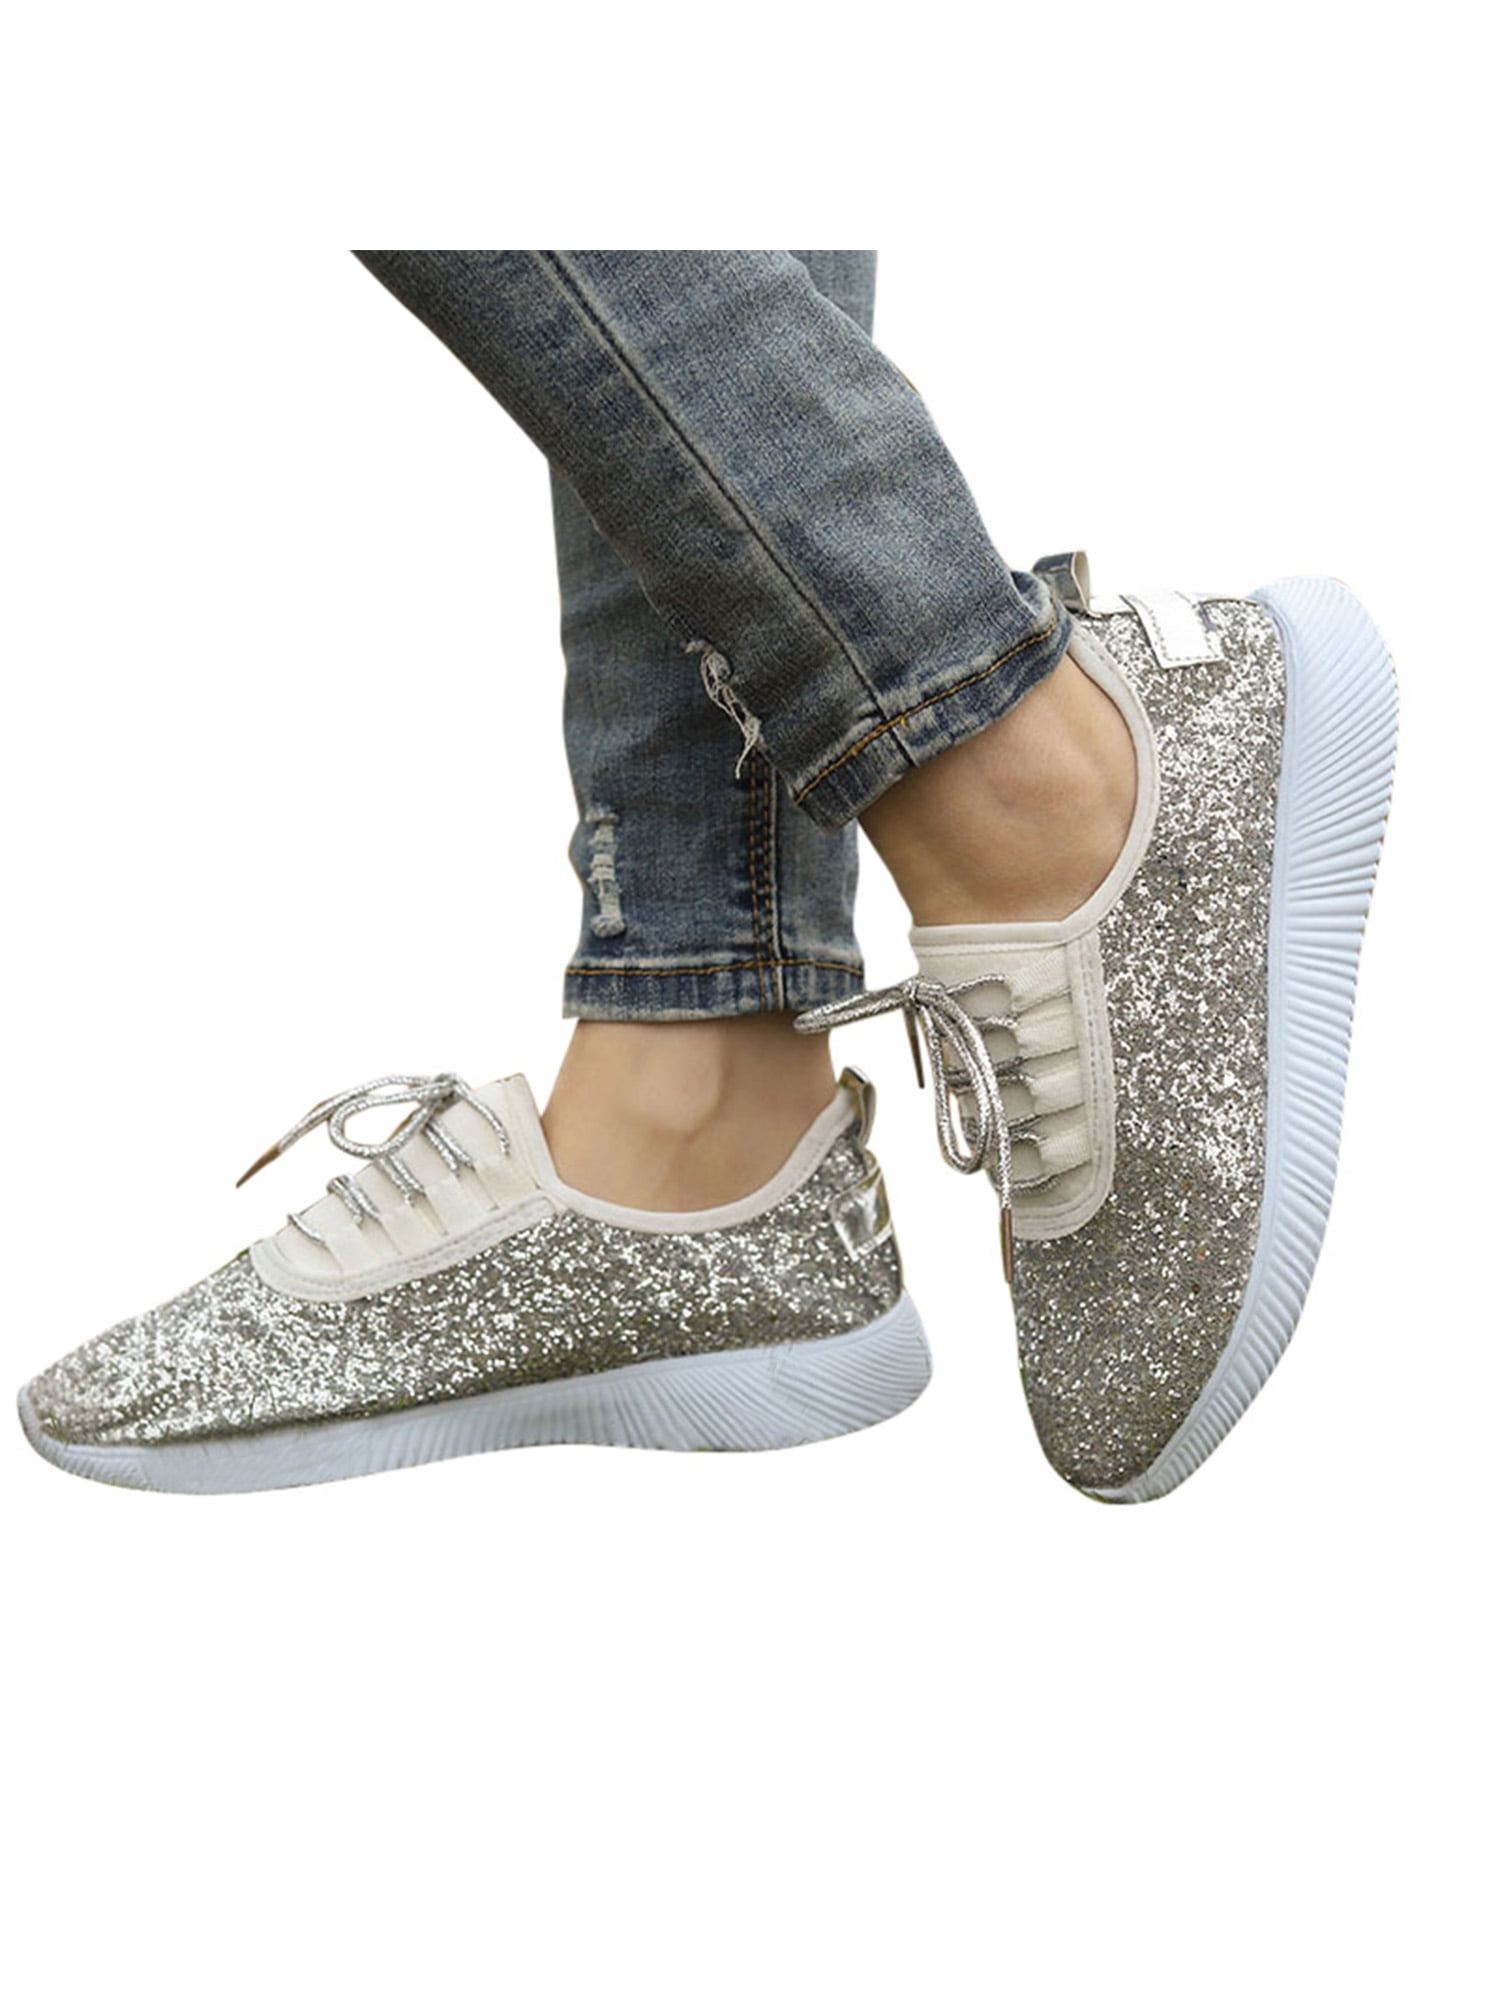 Women Sequin Glitter Sneakers Tennis Lightweight Comfort Walking Athletic Shoes